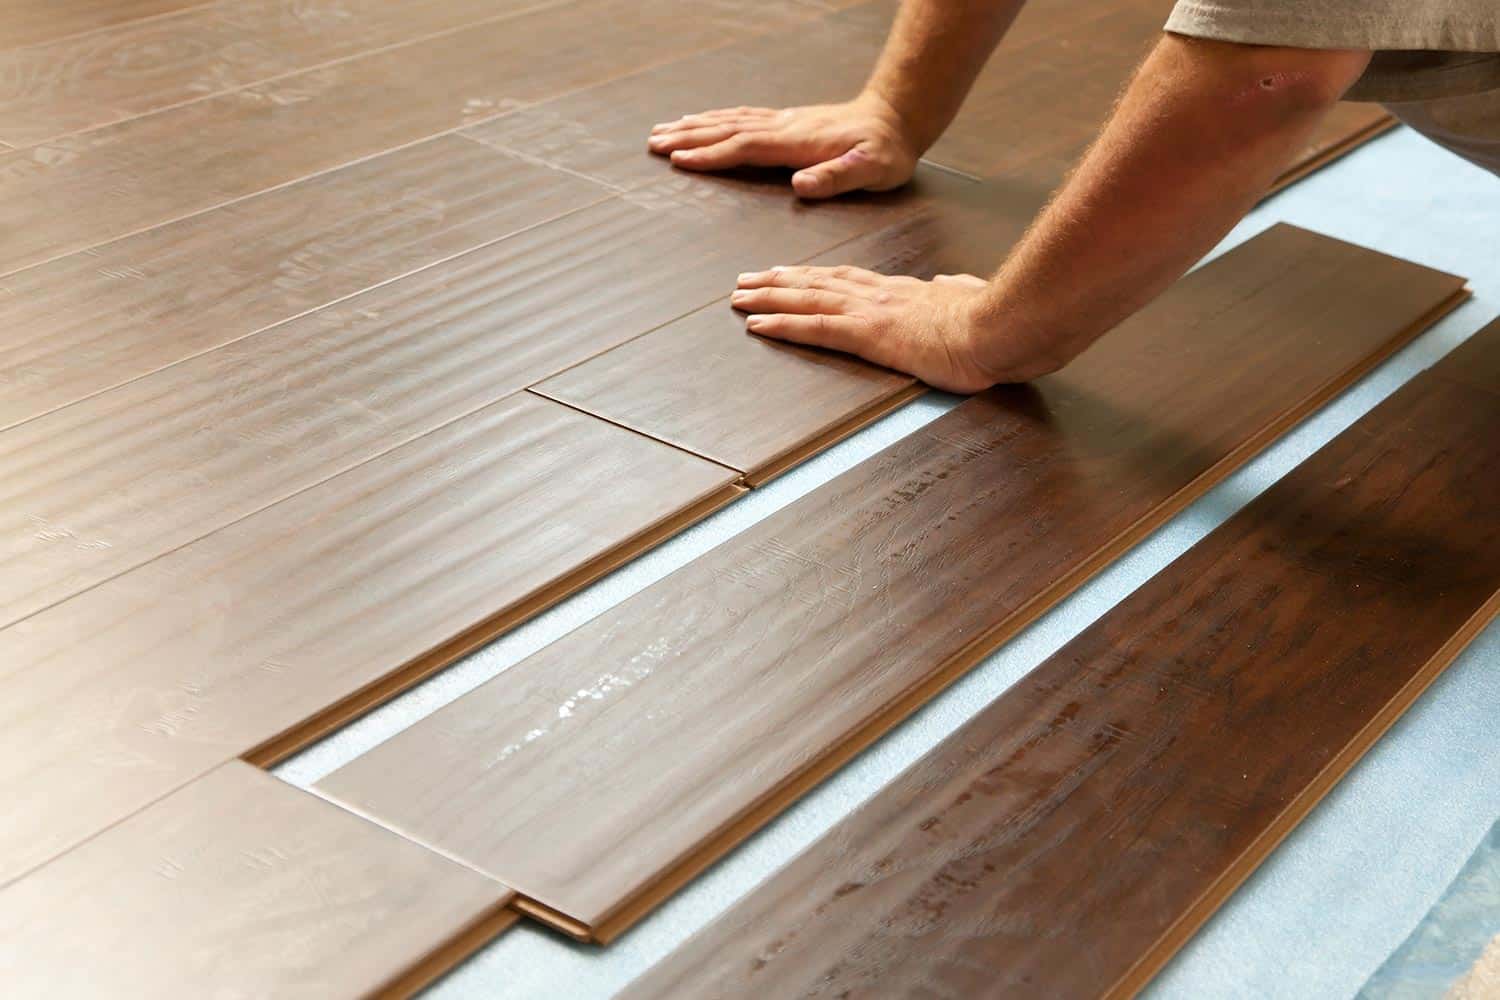 Man installing new laminate wood flooring